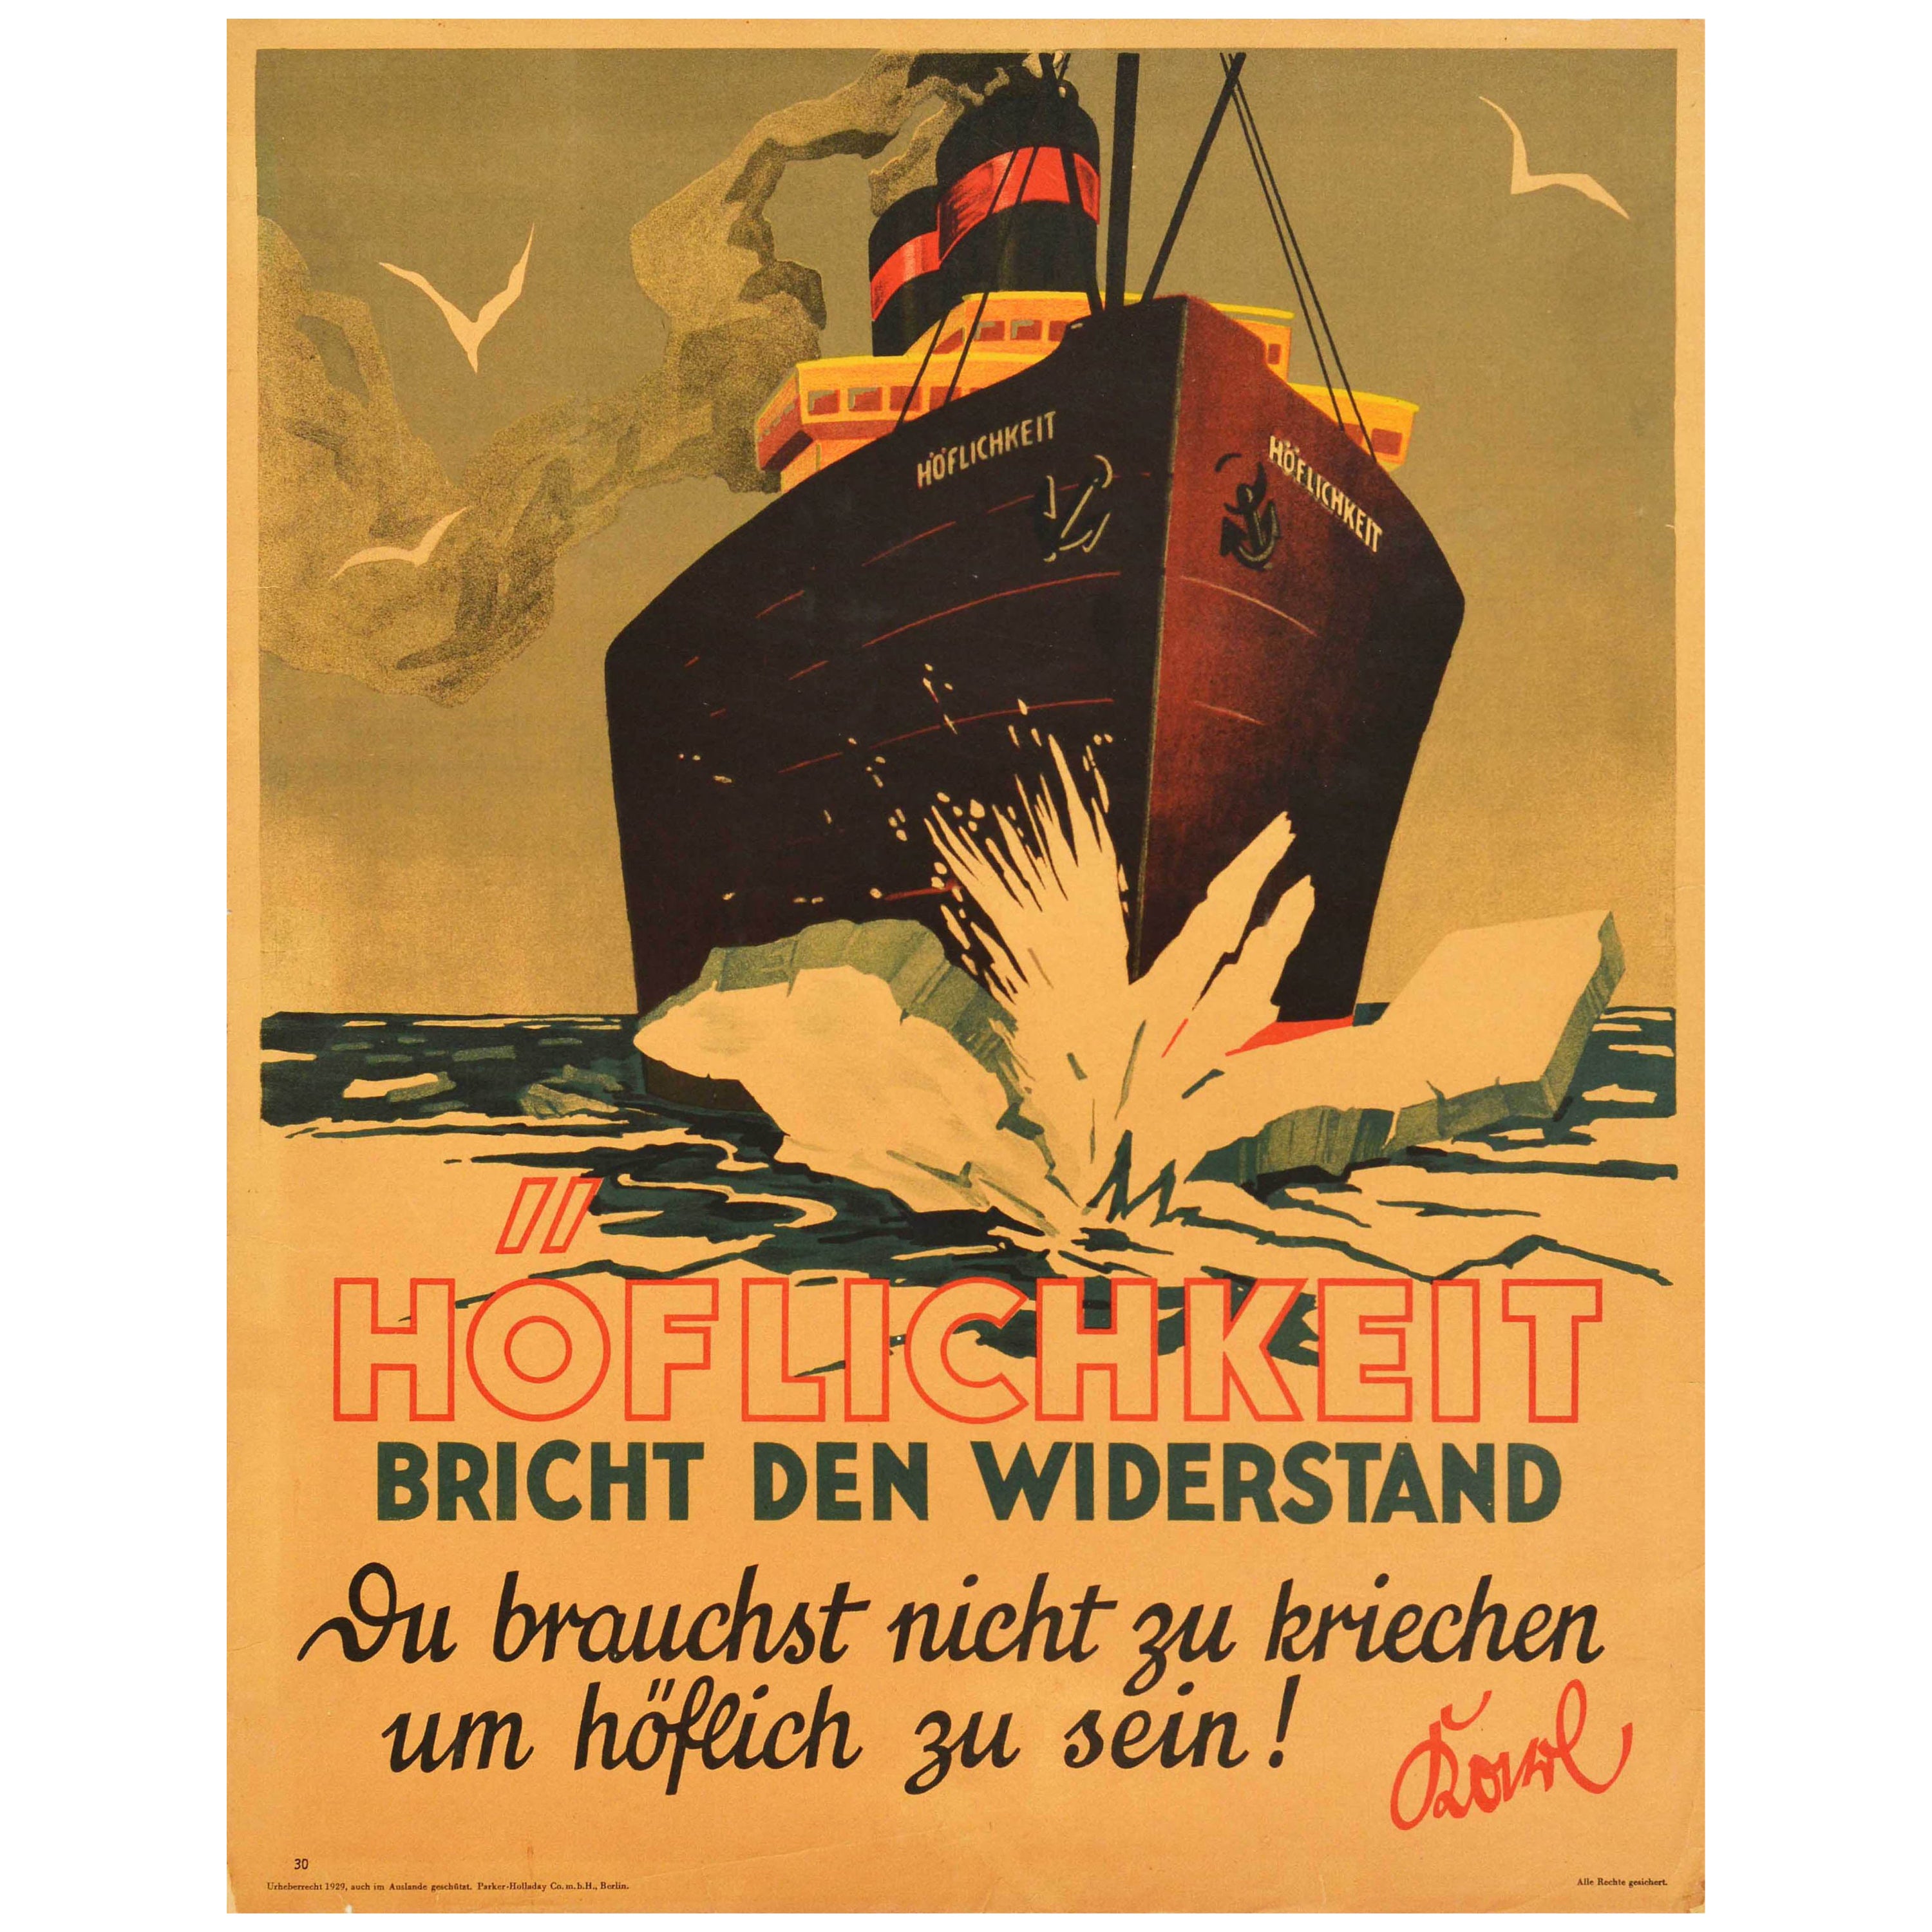 Original Vintage Motivation Poster Hoflichkeit Courtesy Breaks Resistance Quote For Sale